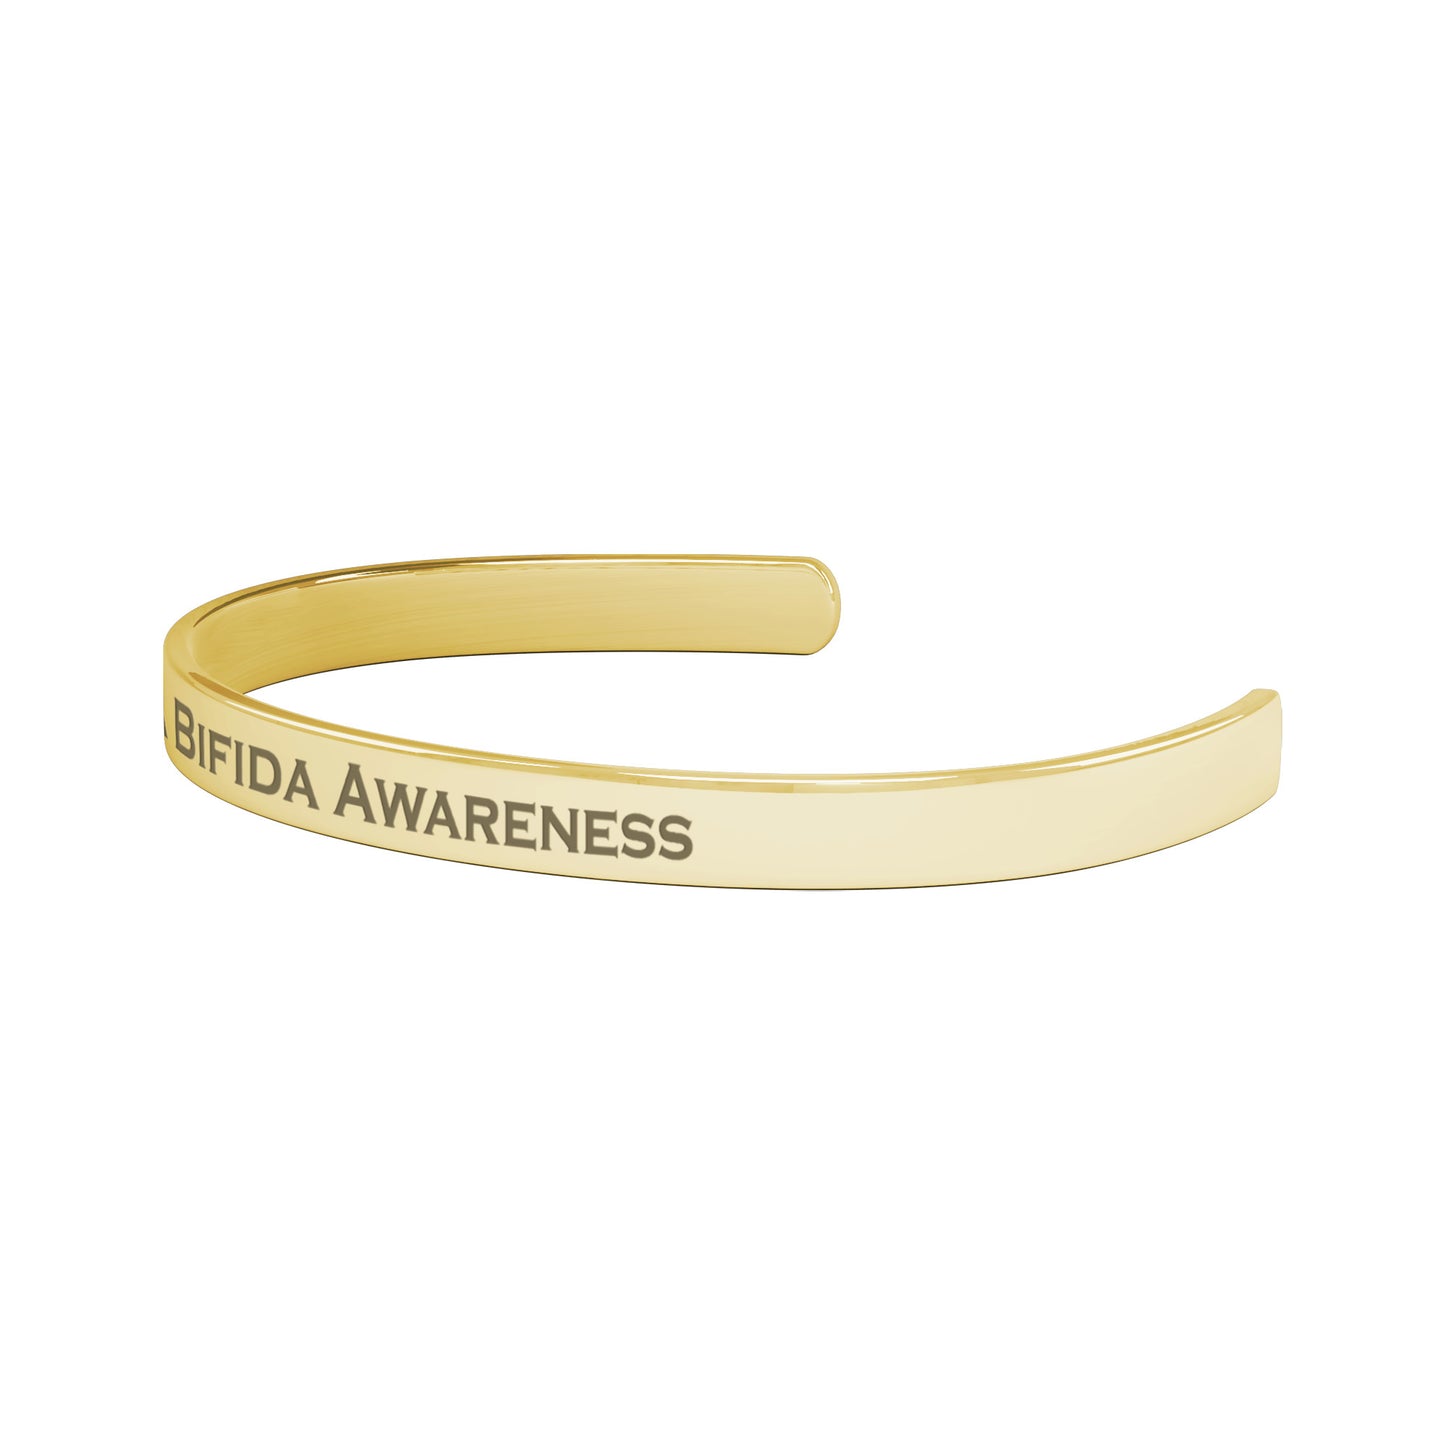 Personalized Spina Bifida Awareness Cuff Bracelet